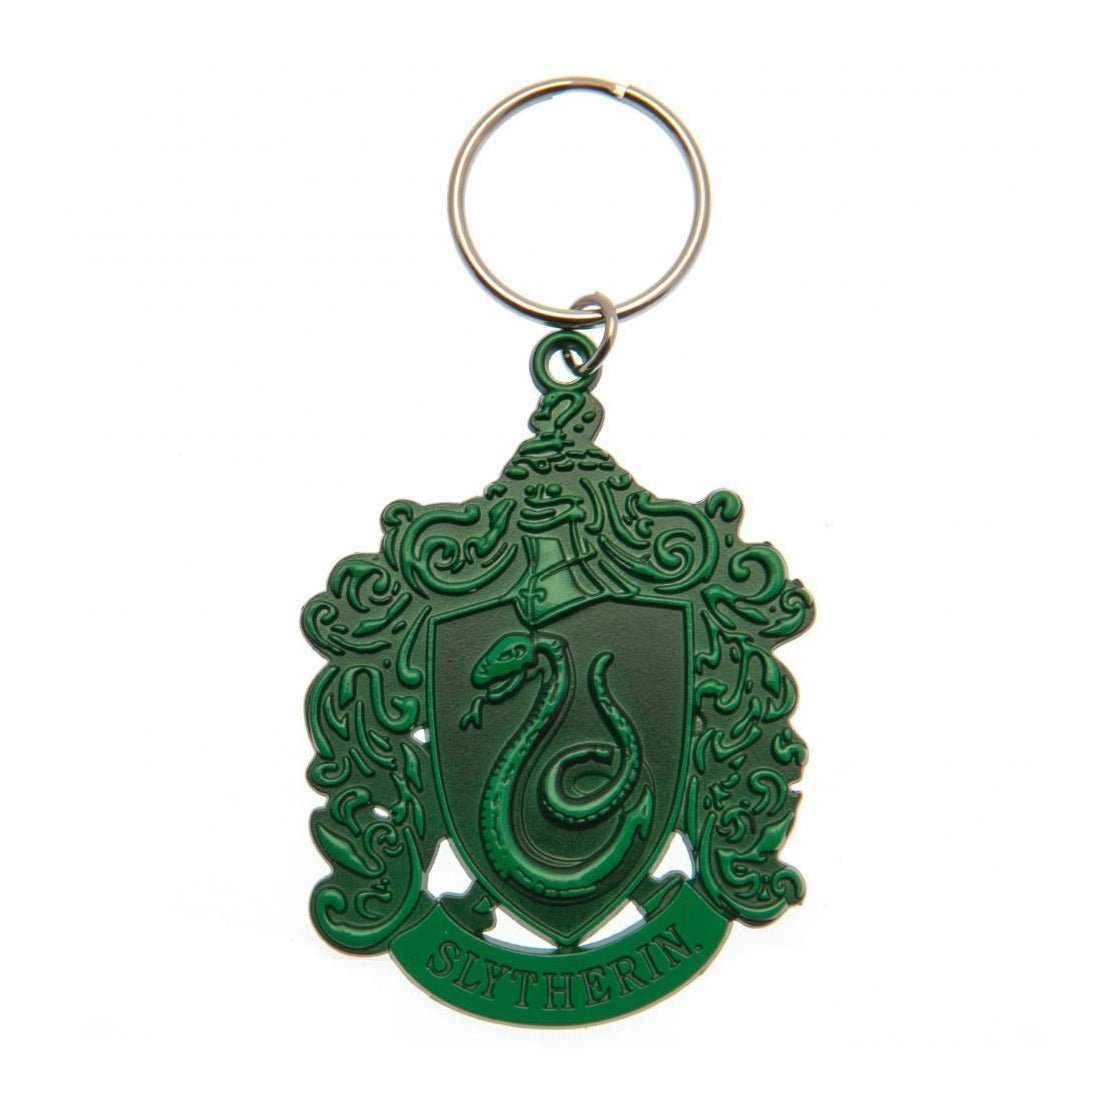 Harry Potter - Slytherin Crest Metal Keychain - أكسسوار - Store 974 | ستور ٩٧٤